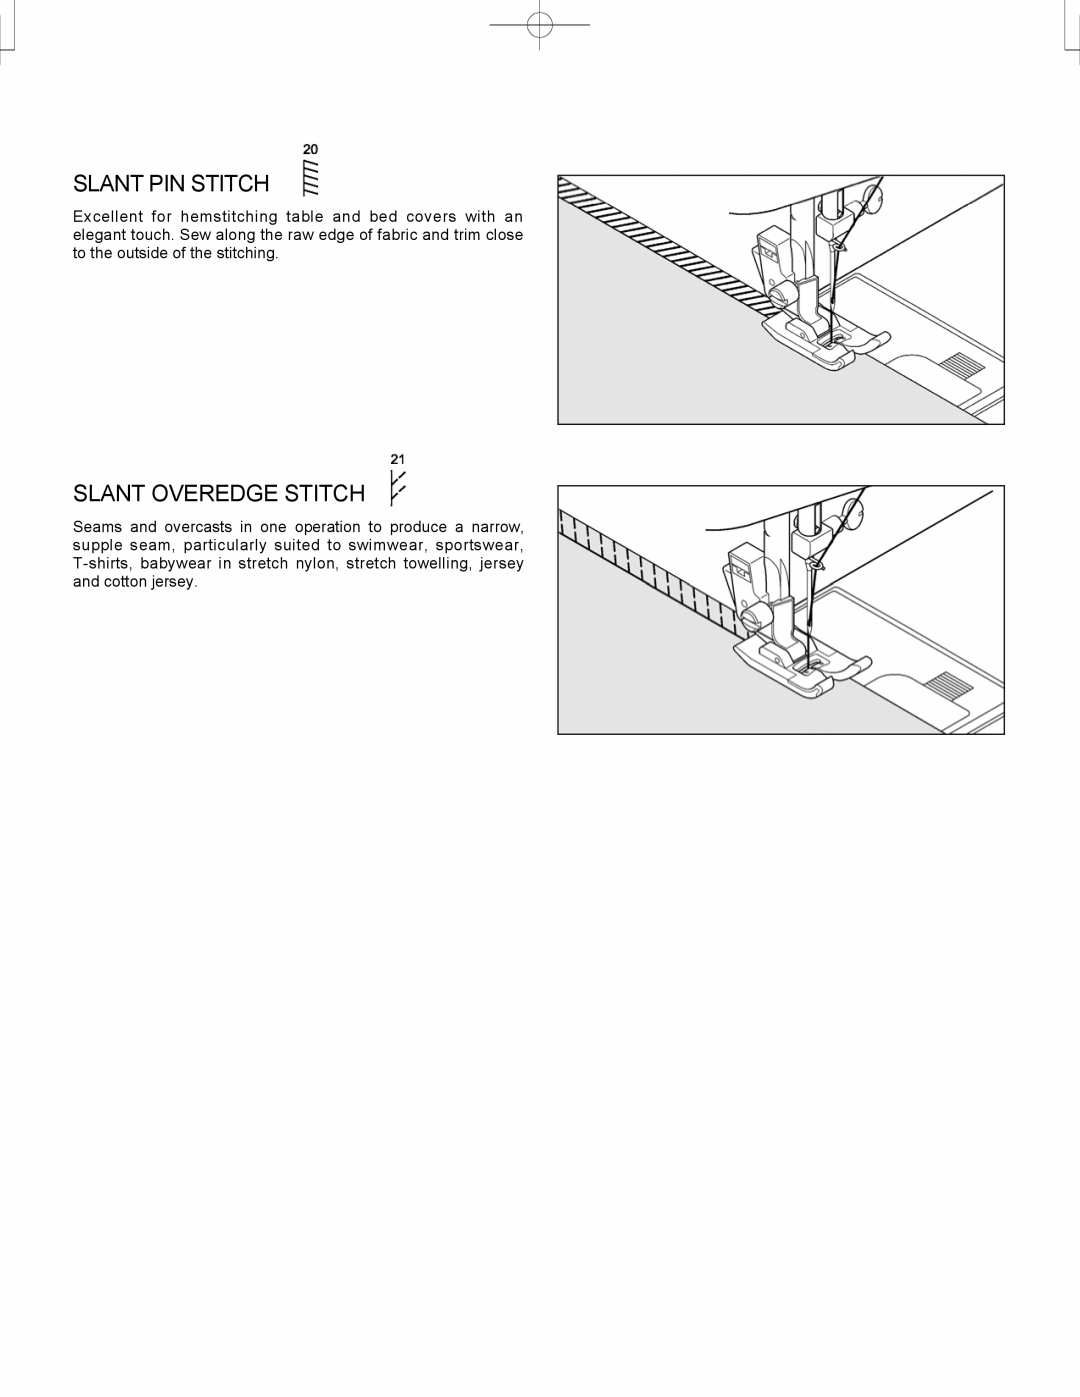 Singer CE-150 instruction manual Slant PIN Stitch, Slant Overedge Stitch 